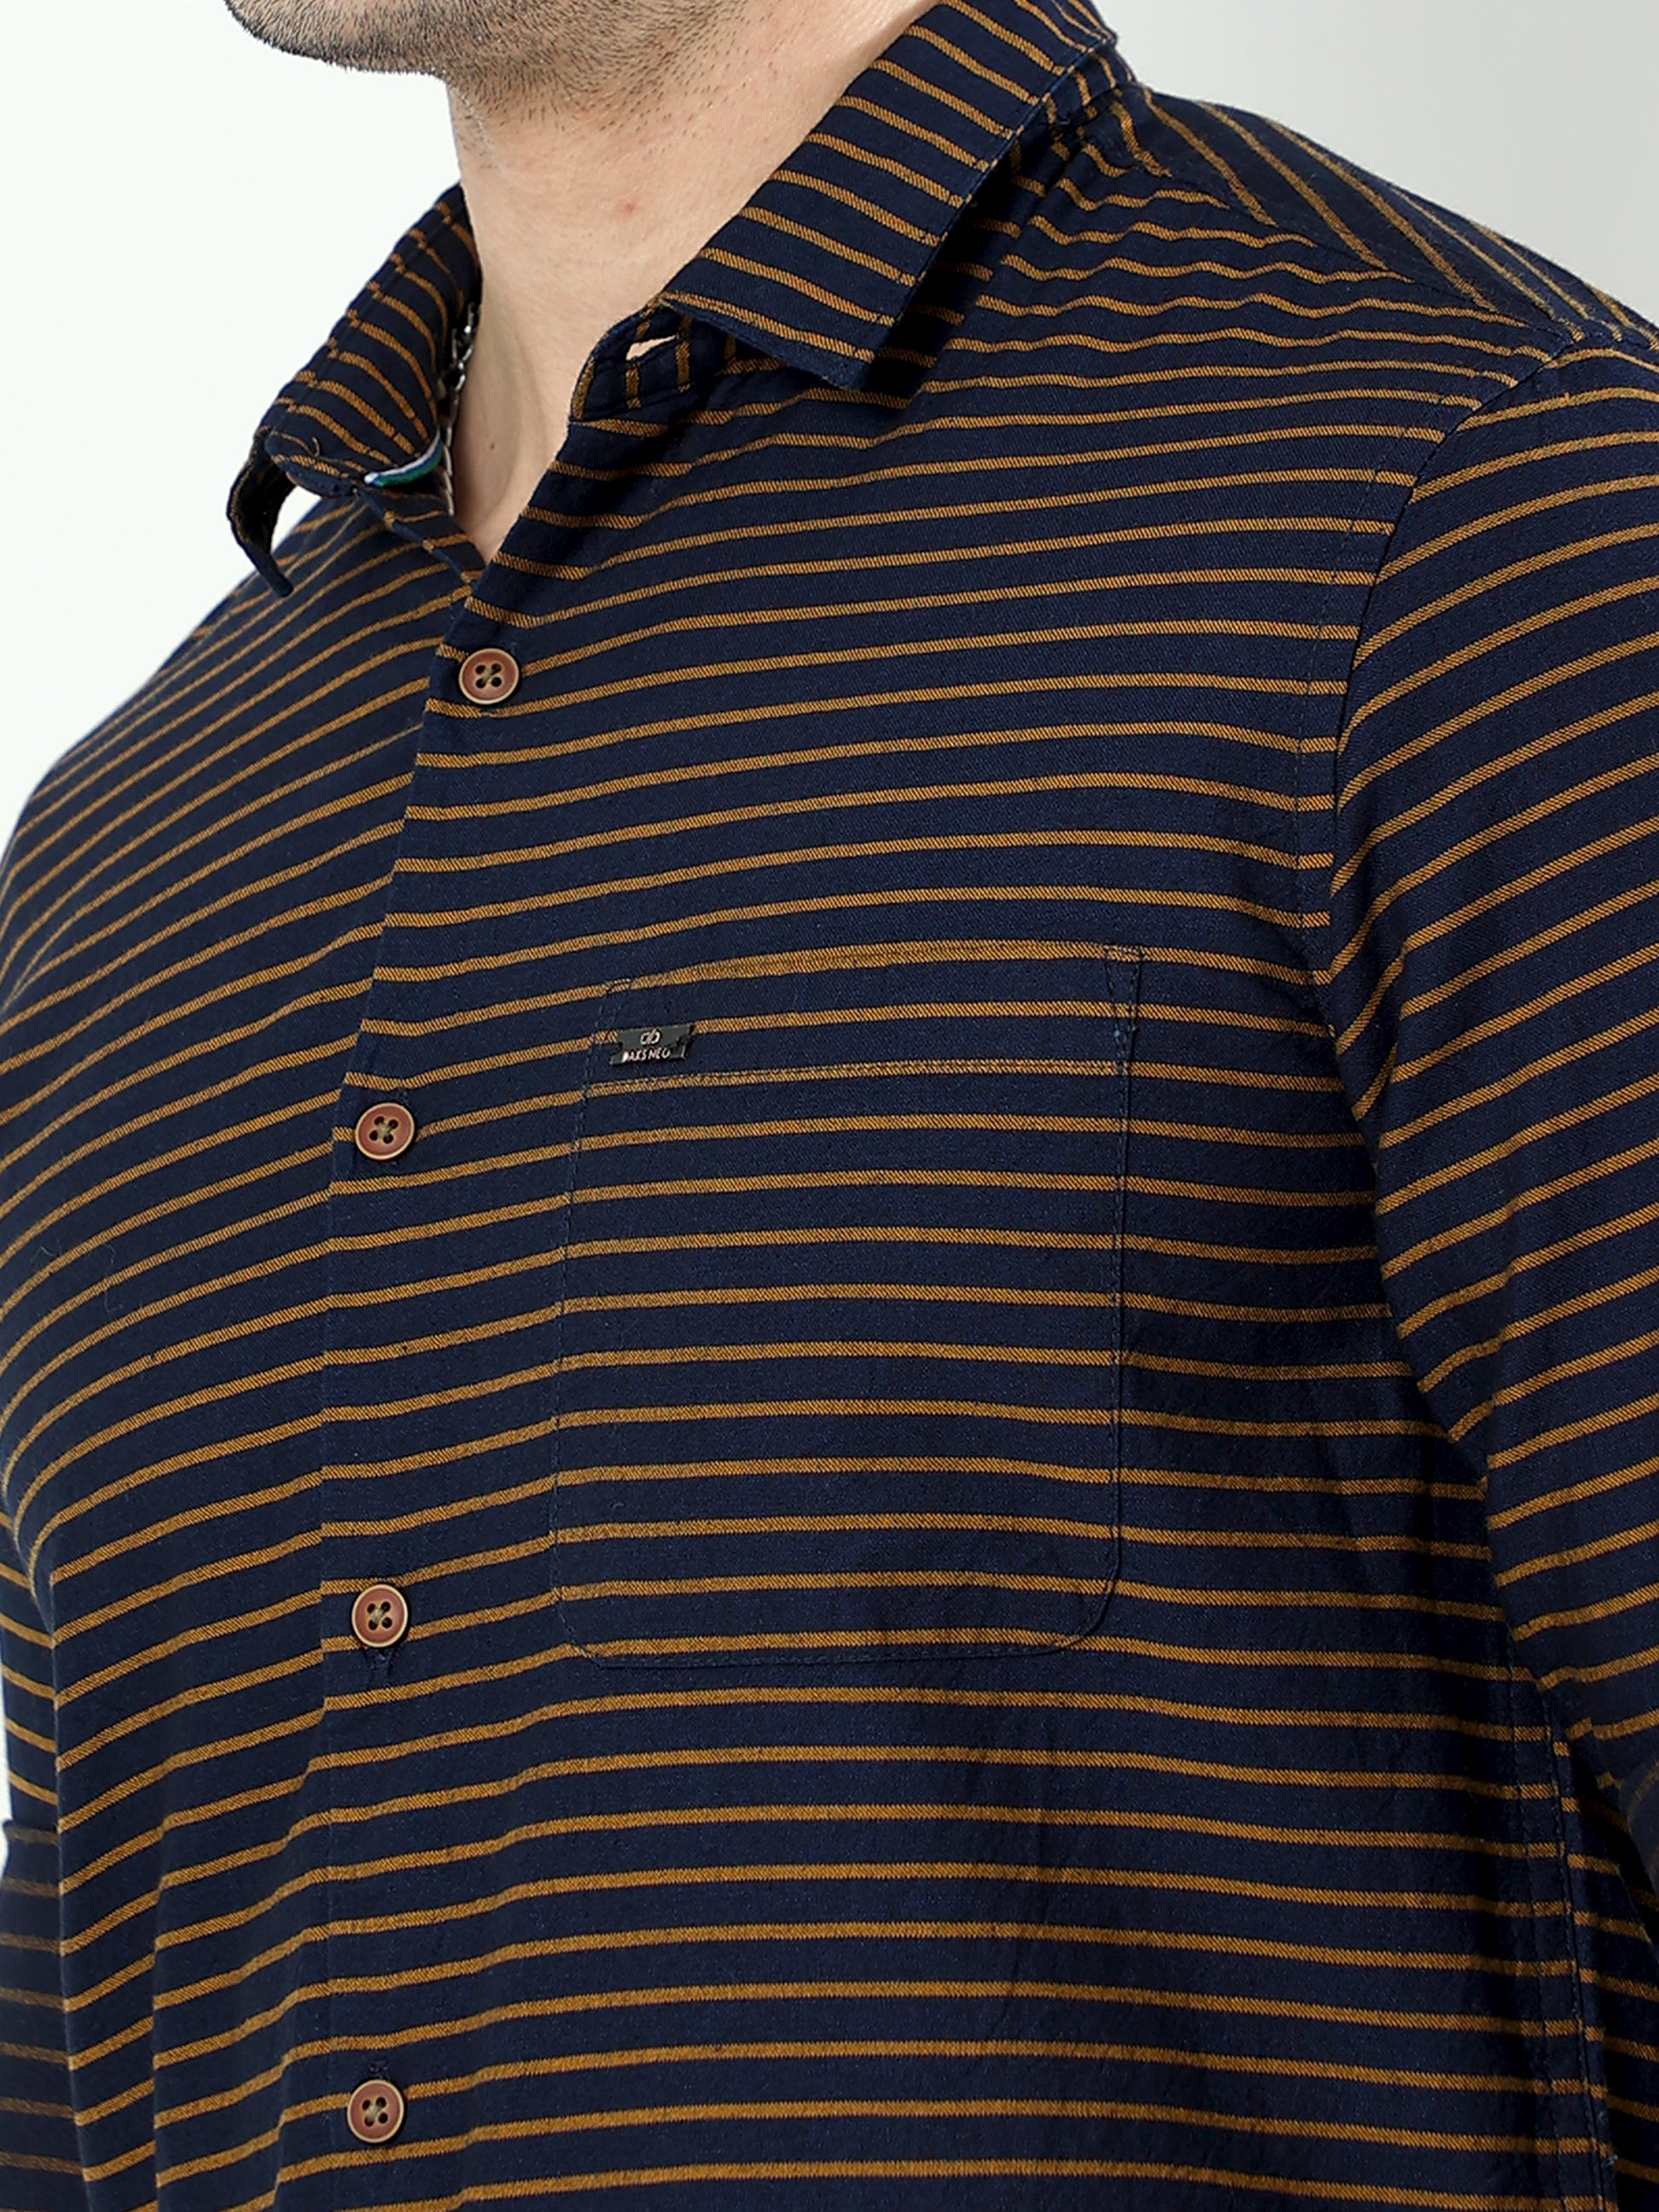 Brown Stripe Full Sleeve Shirt